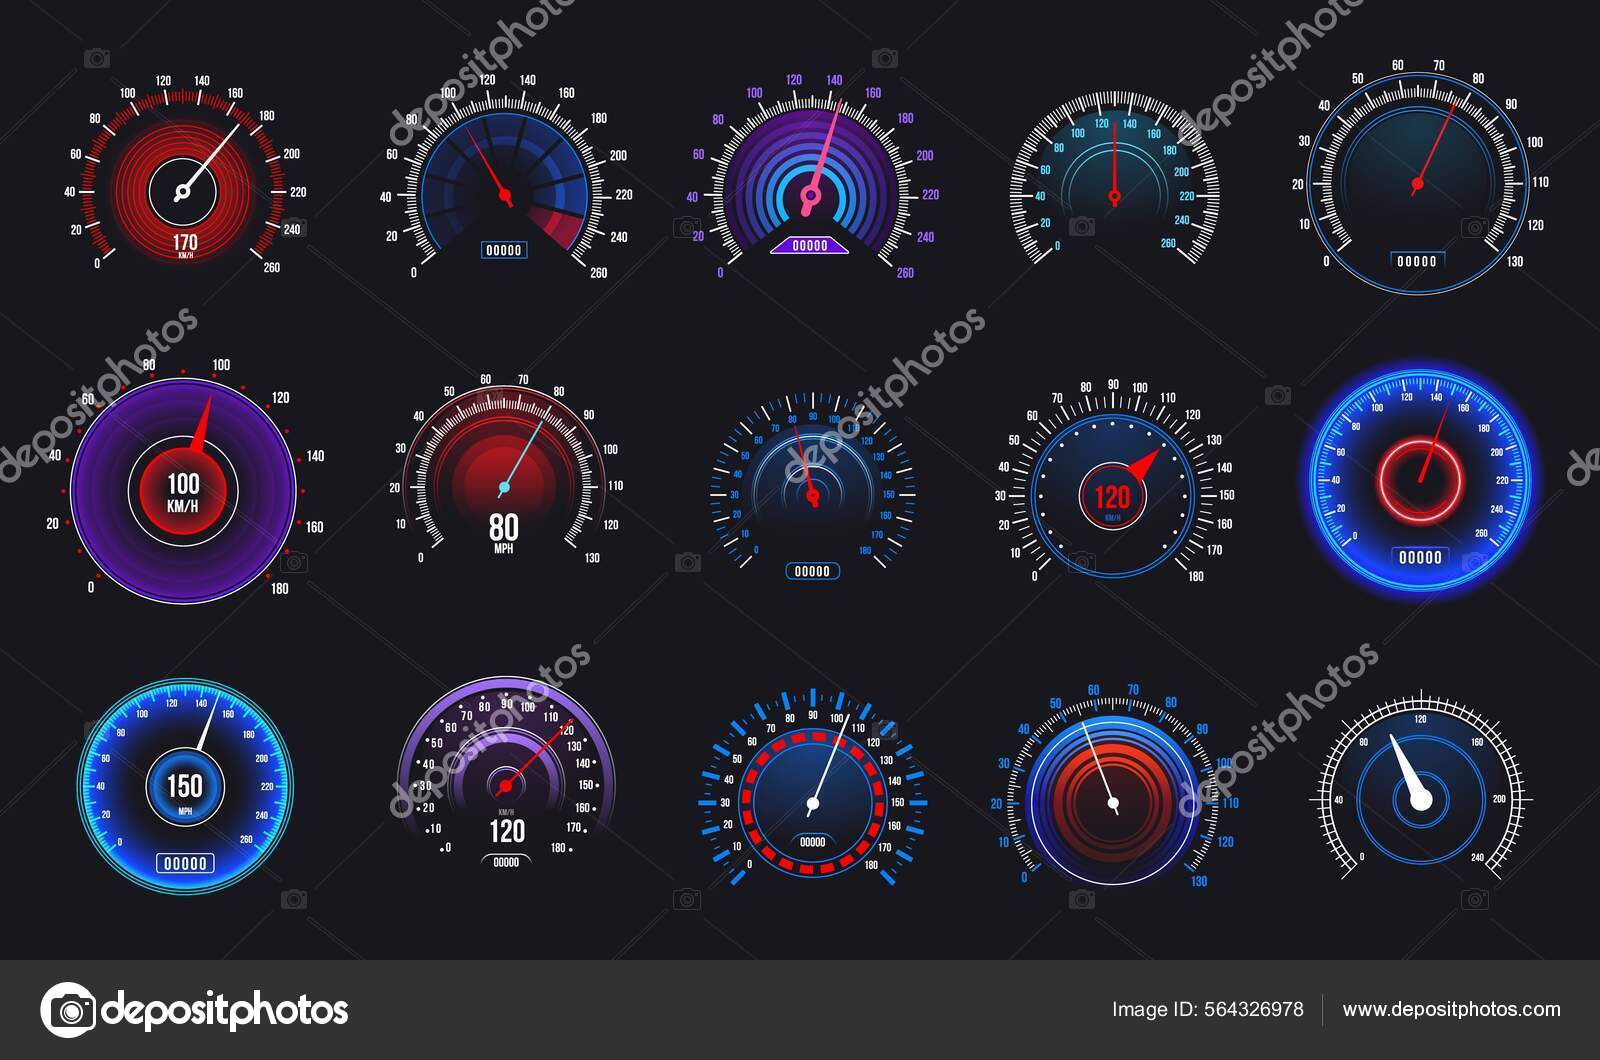 https://st.depositphotos.com/16959514/56432/v/1600/depositphotos_564326978-stock-illustration-car-speedometer-odometer-and-rpm.jpg